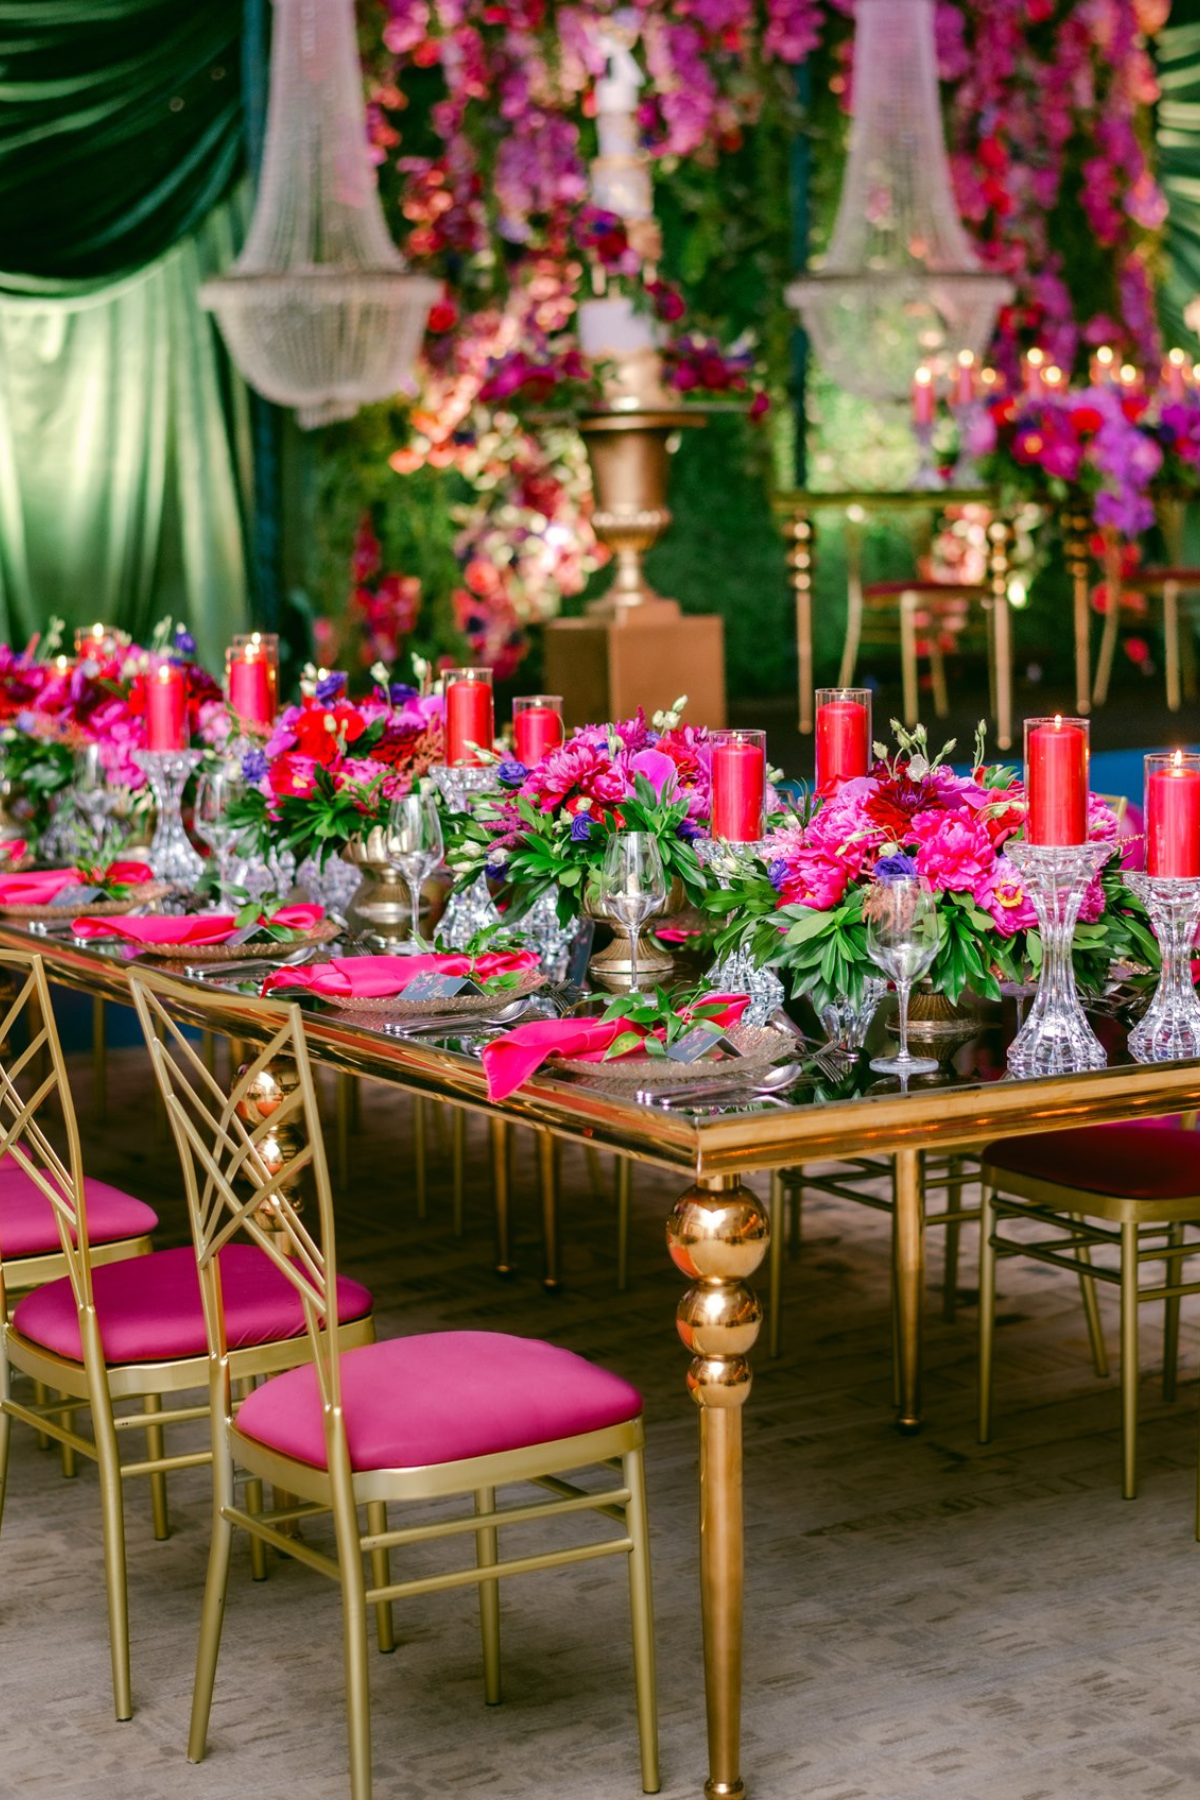 secret-garden-wedding-reception-greenery-pink-purple-gold-chairs-table-chandeliers